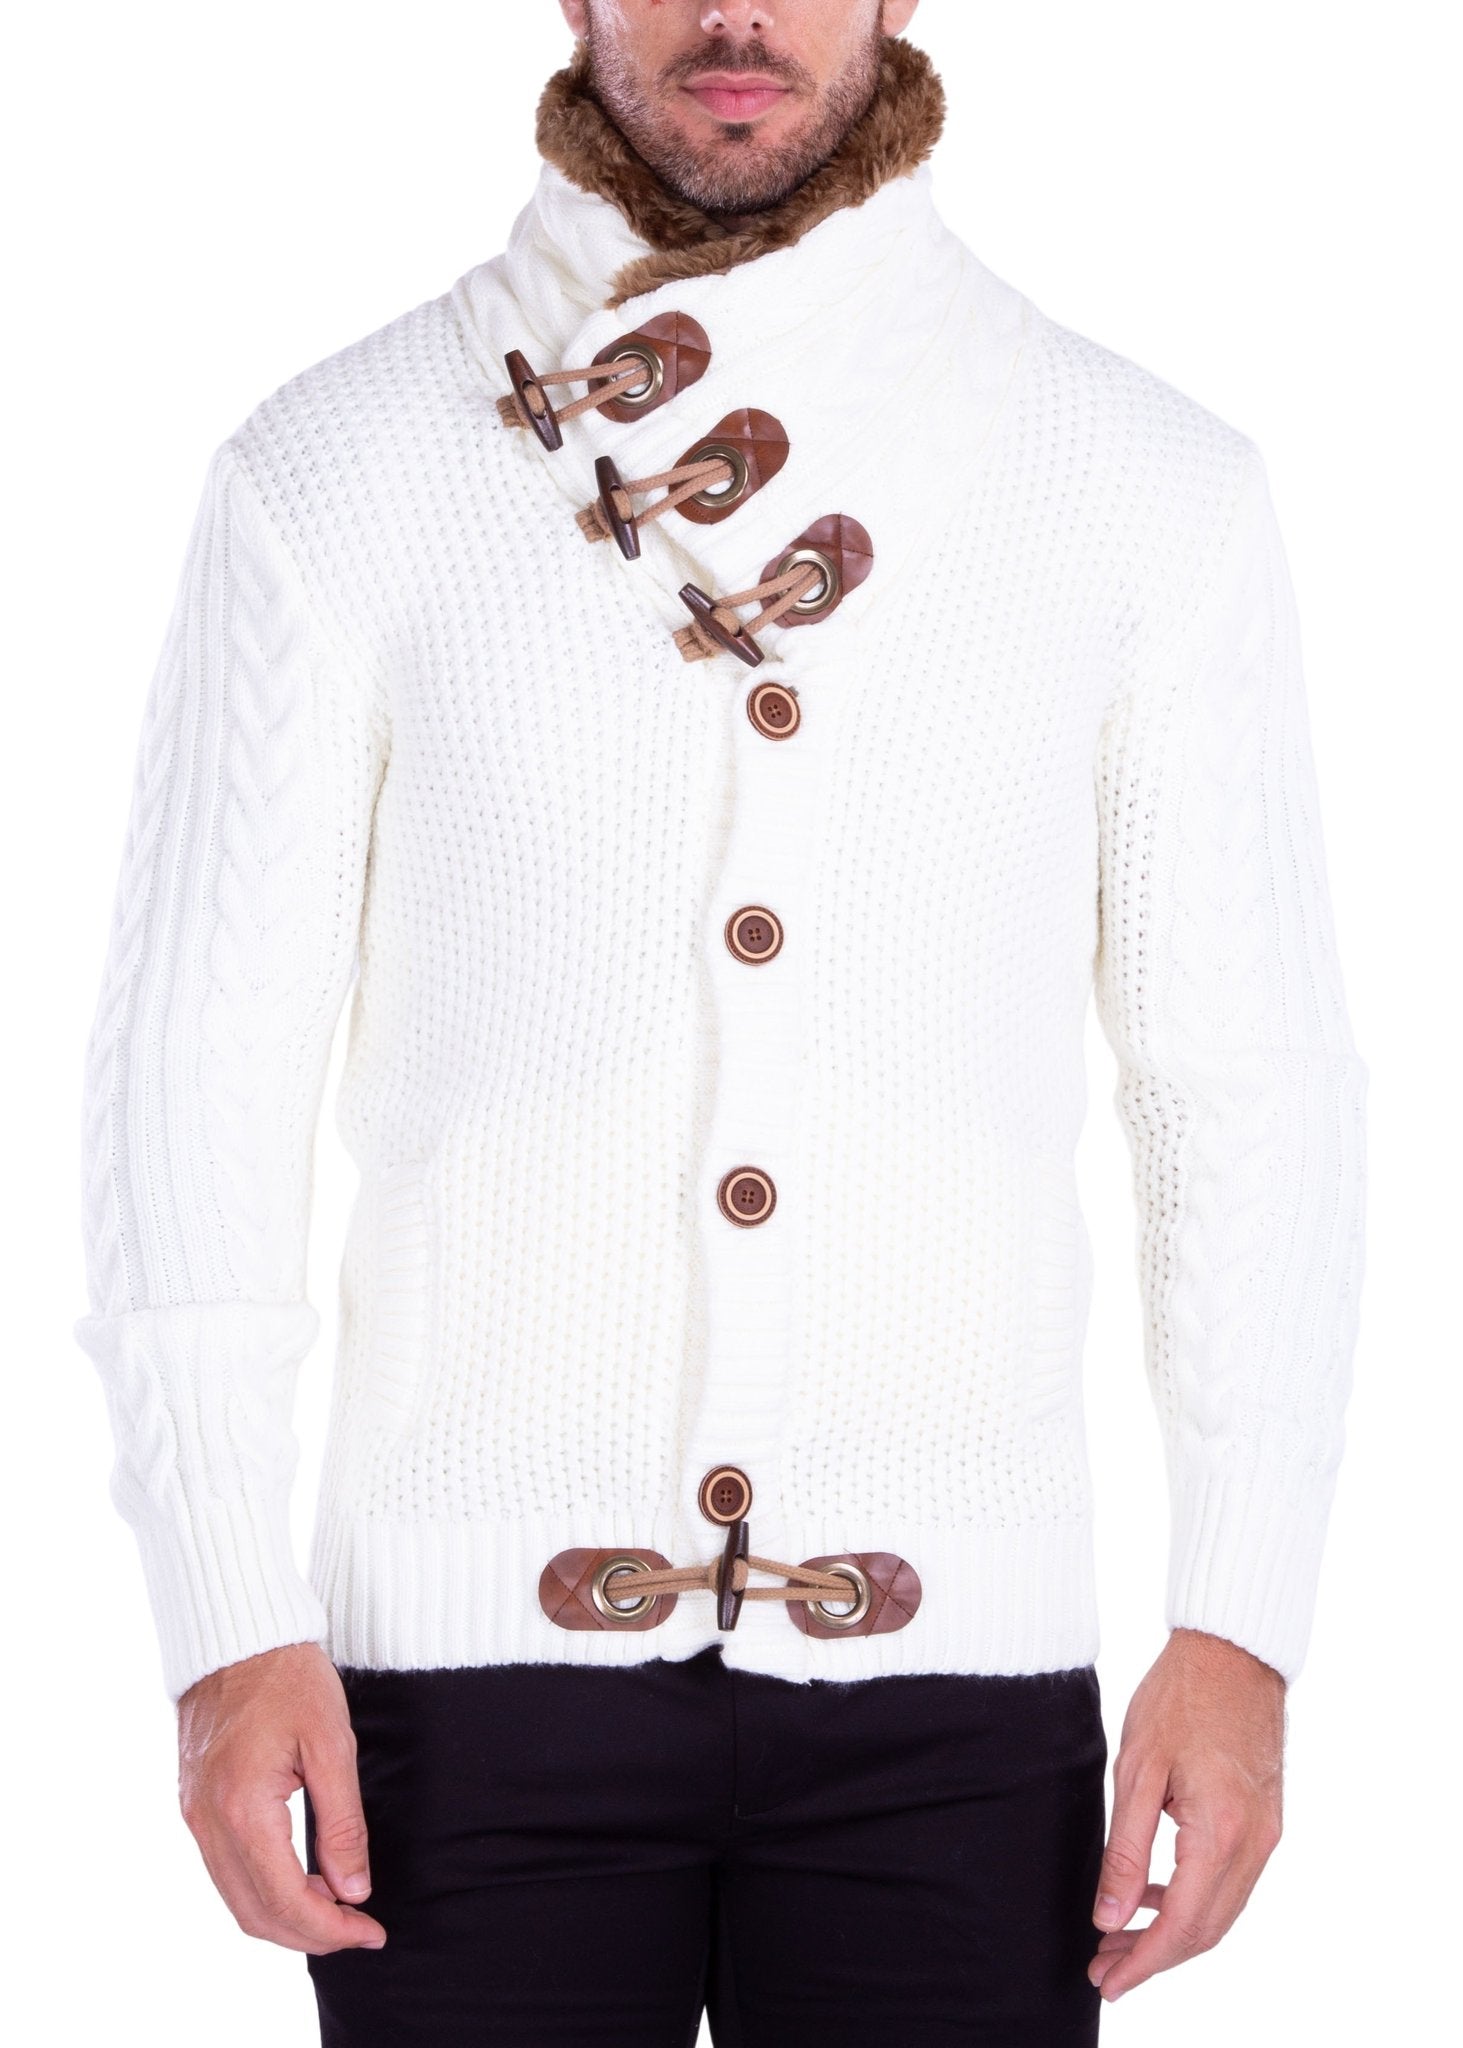 Men's Button Up Sweater With Collar | delandfishhouse.com